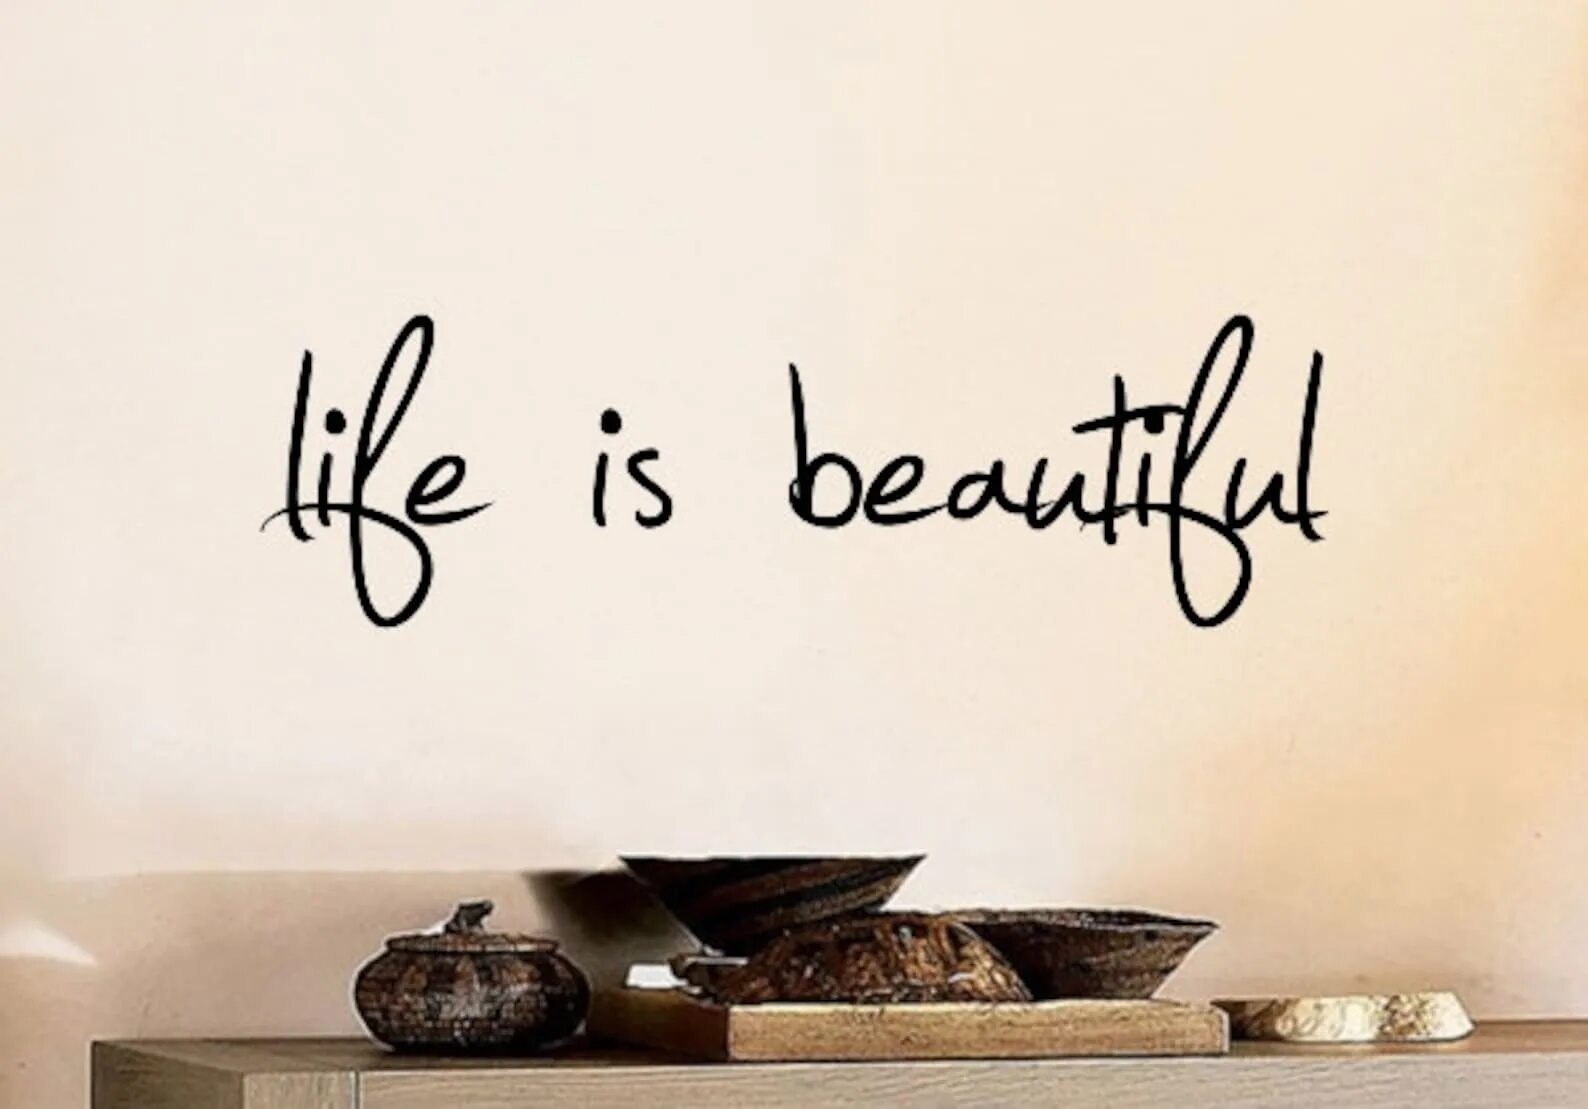 Life надпись. Жизнь прекрасна надпись. Life is beautiful надпись. Life is beautiful красивая надпись. Переведи is beautiful